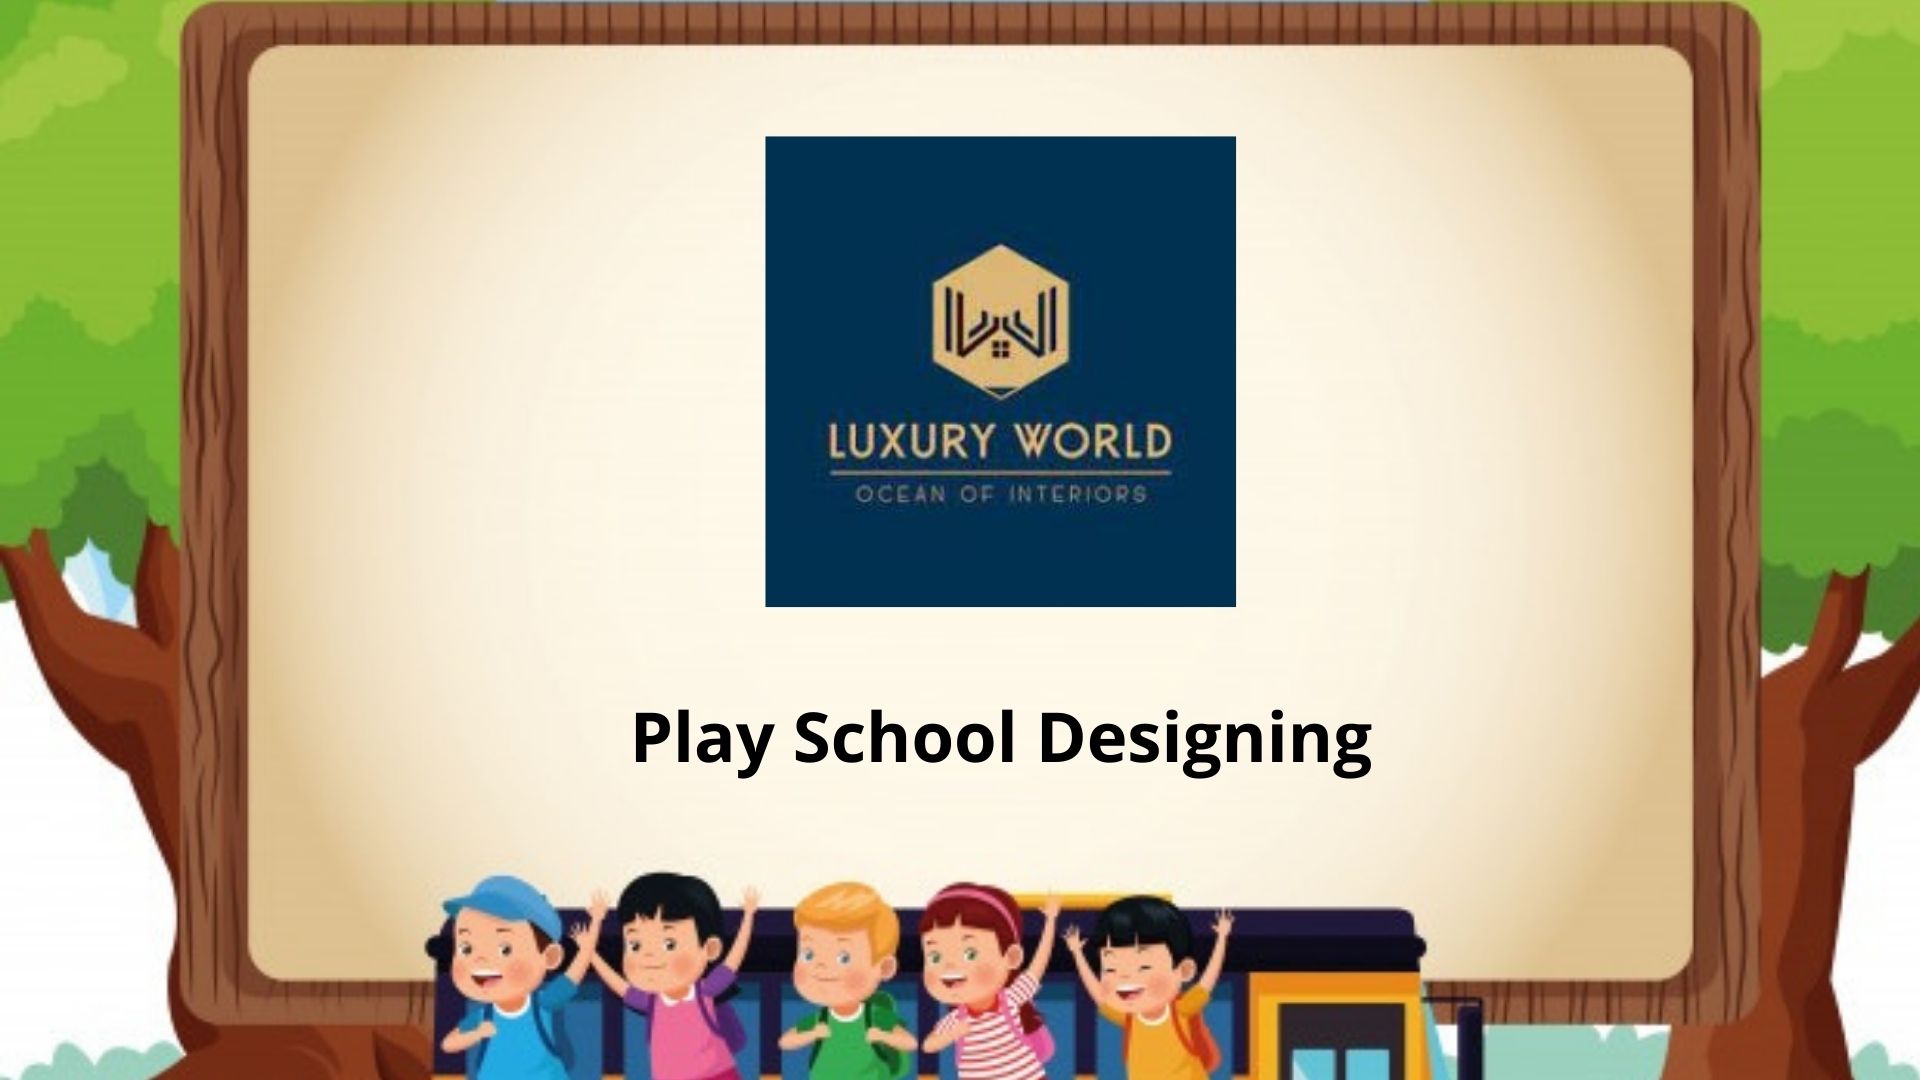 Play School Designing – luxury world interiors